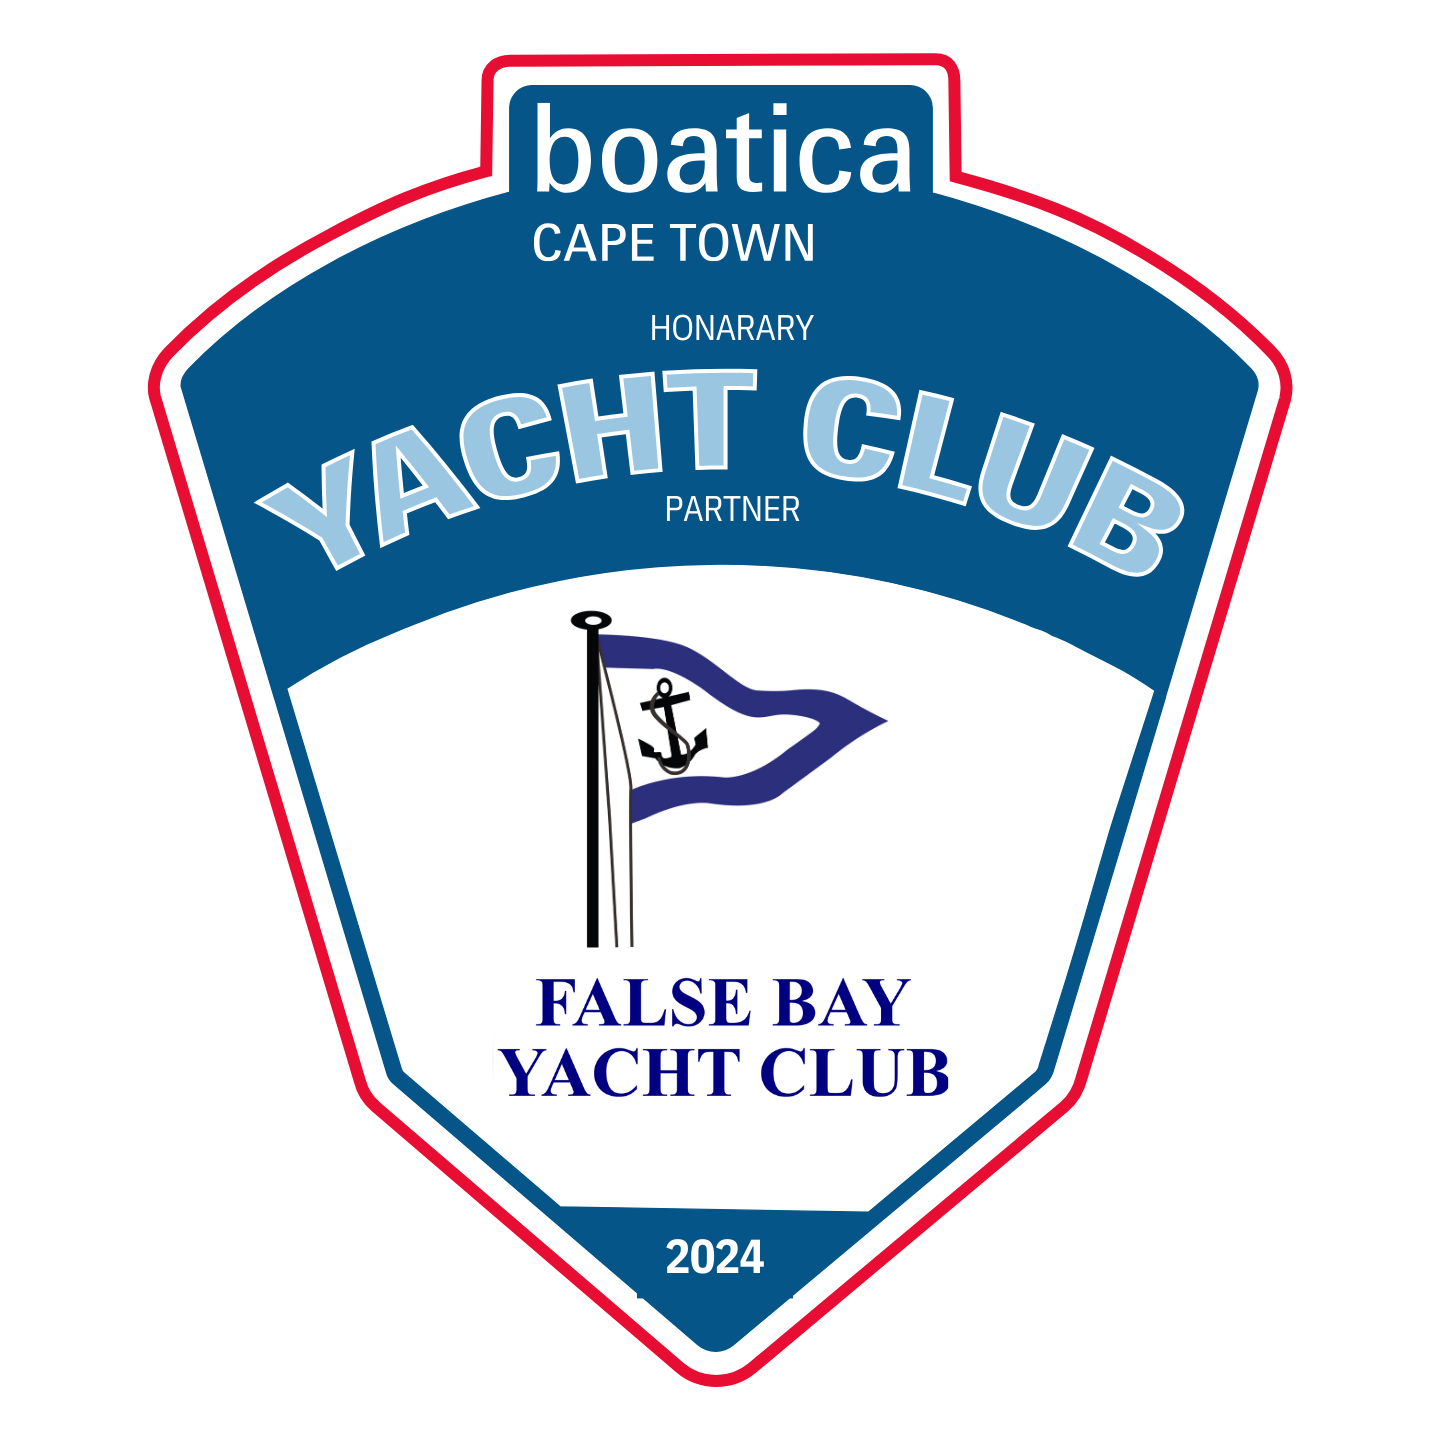 Boatica honorary yacht club partner logo.ai - 2